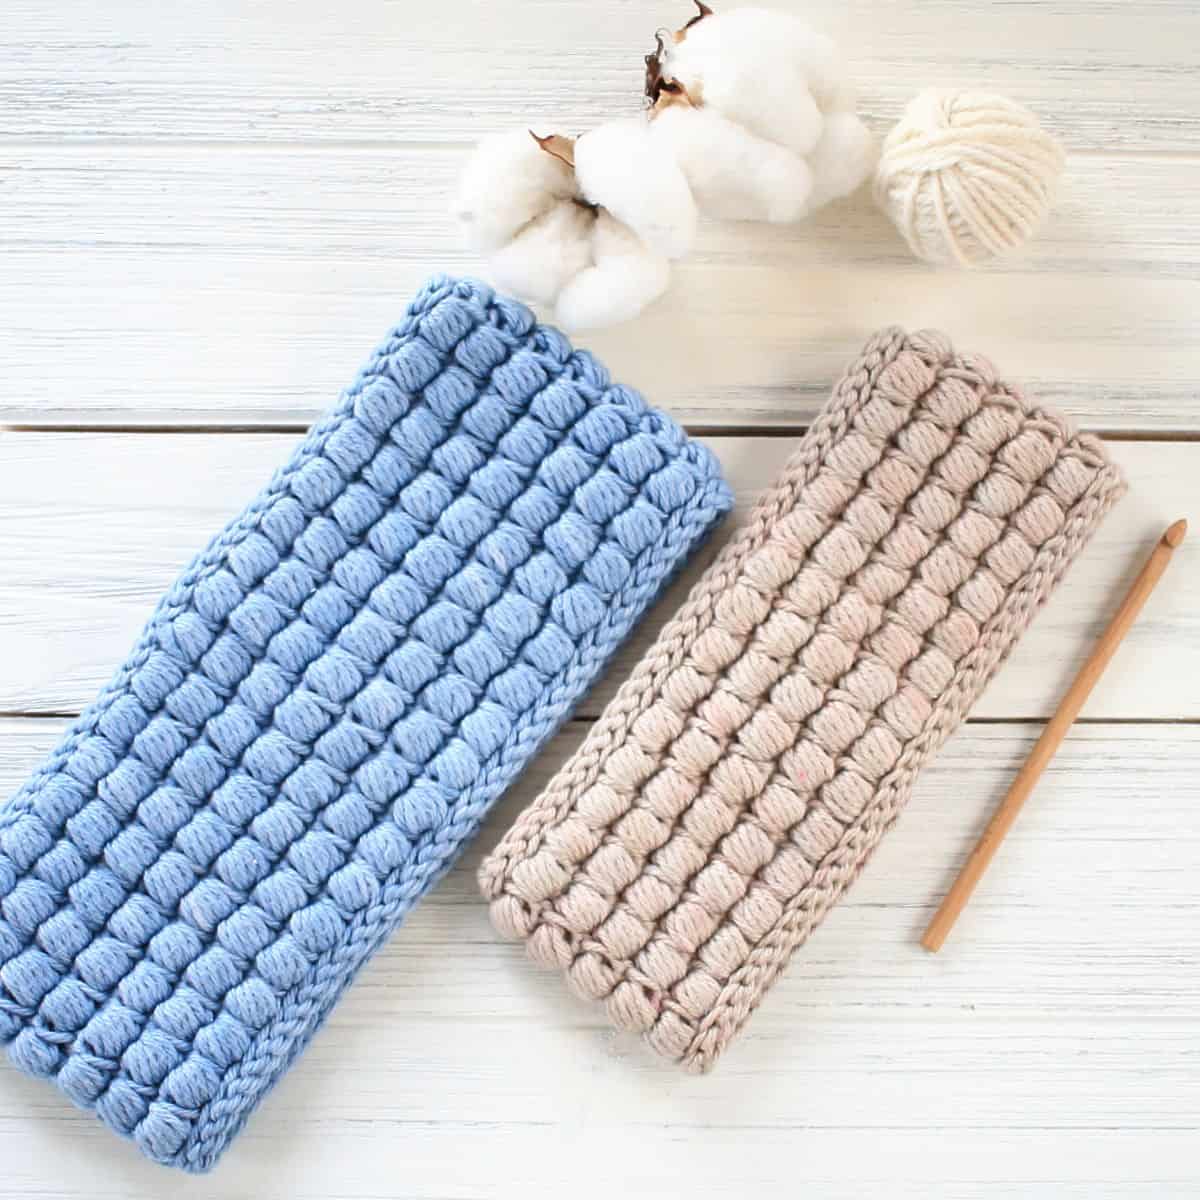 Crochet Headband Pattern. Multiple sizes to keep the family's ears warm.